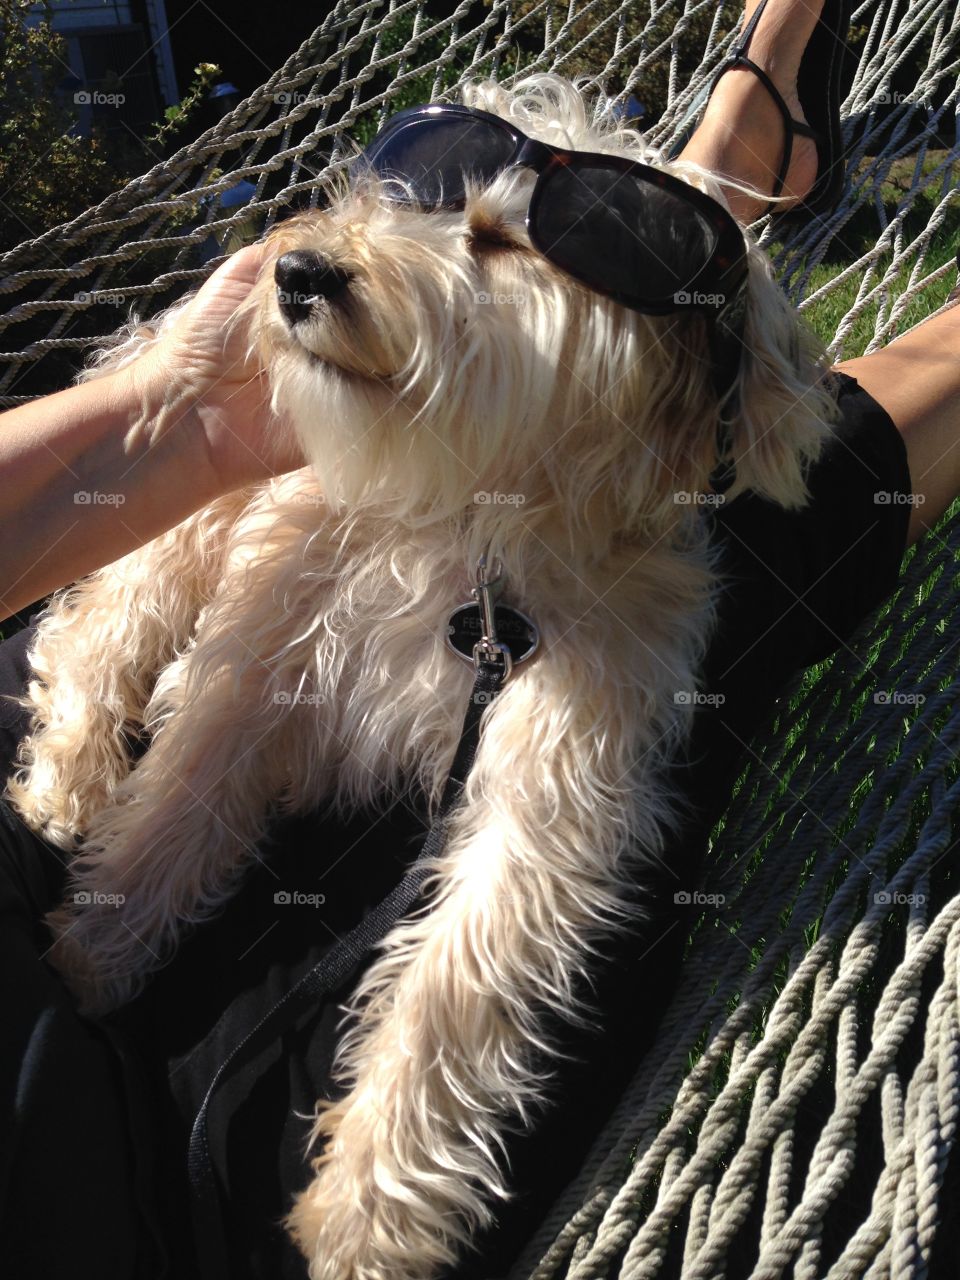 Shades. Dog wearing SunGlasses